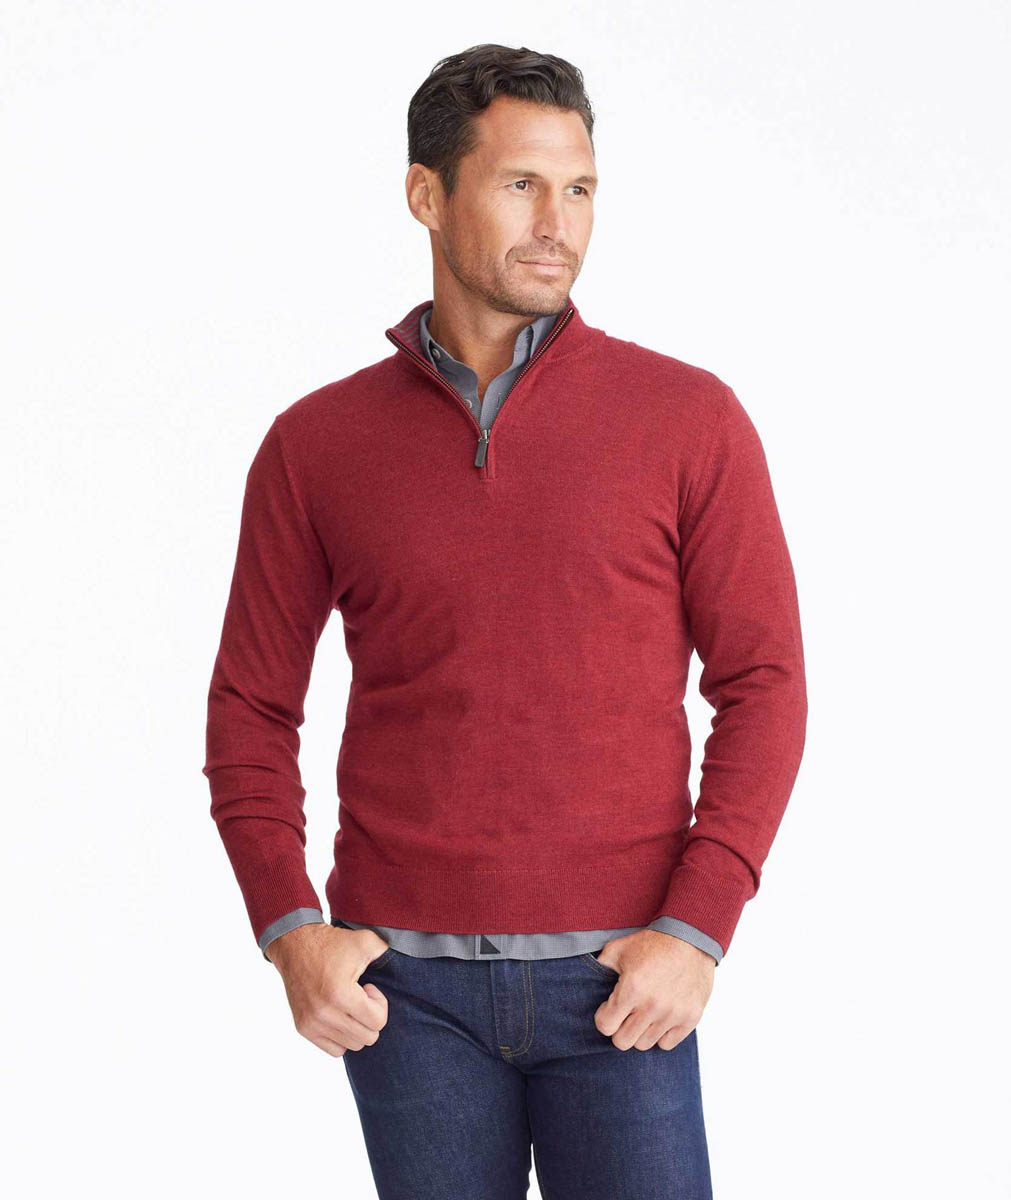 Holiday Gifting for Men Merino Wool Quarter Zip Pullover